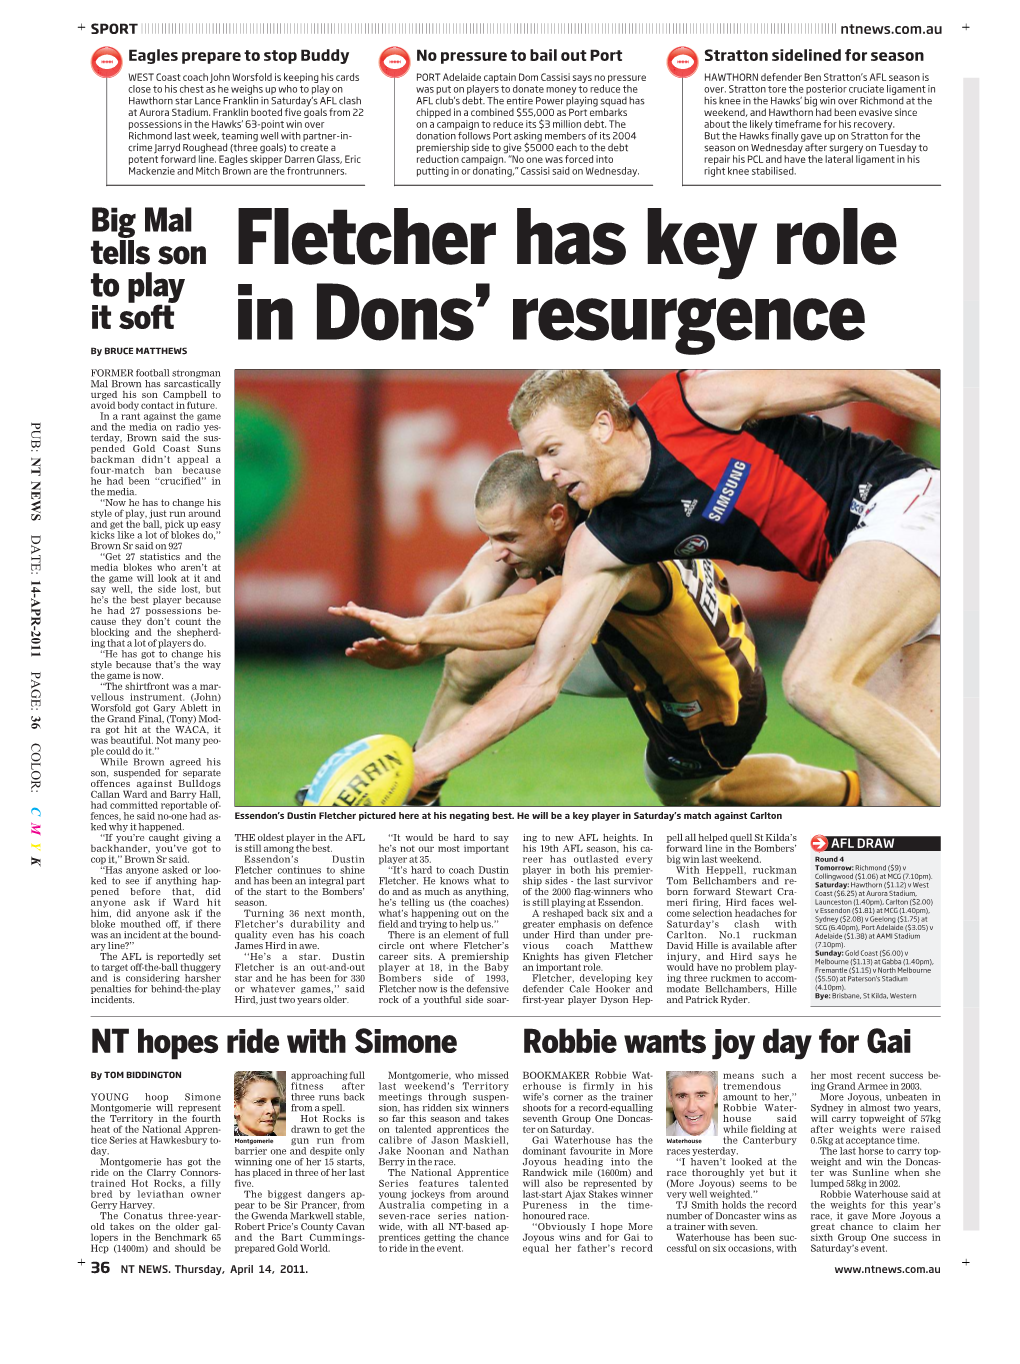 Fletcher Has Key Role in Dons' Resurgence